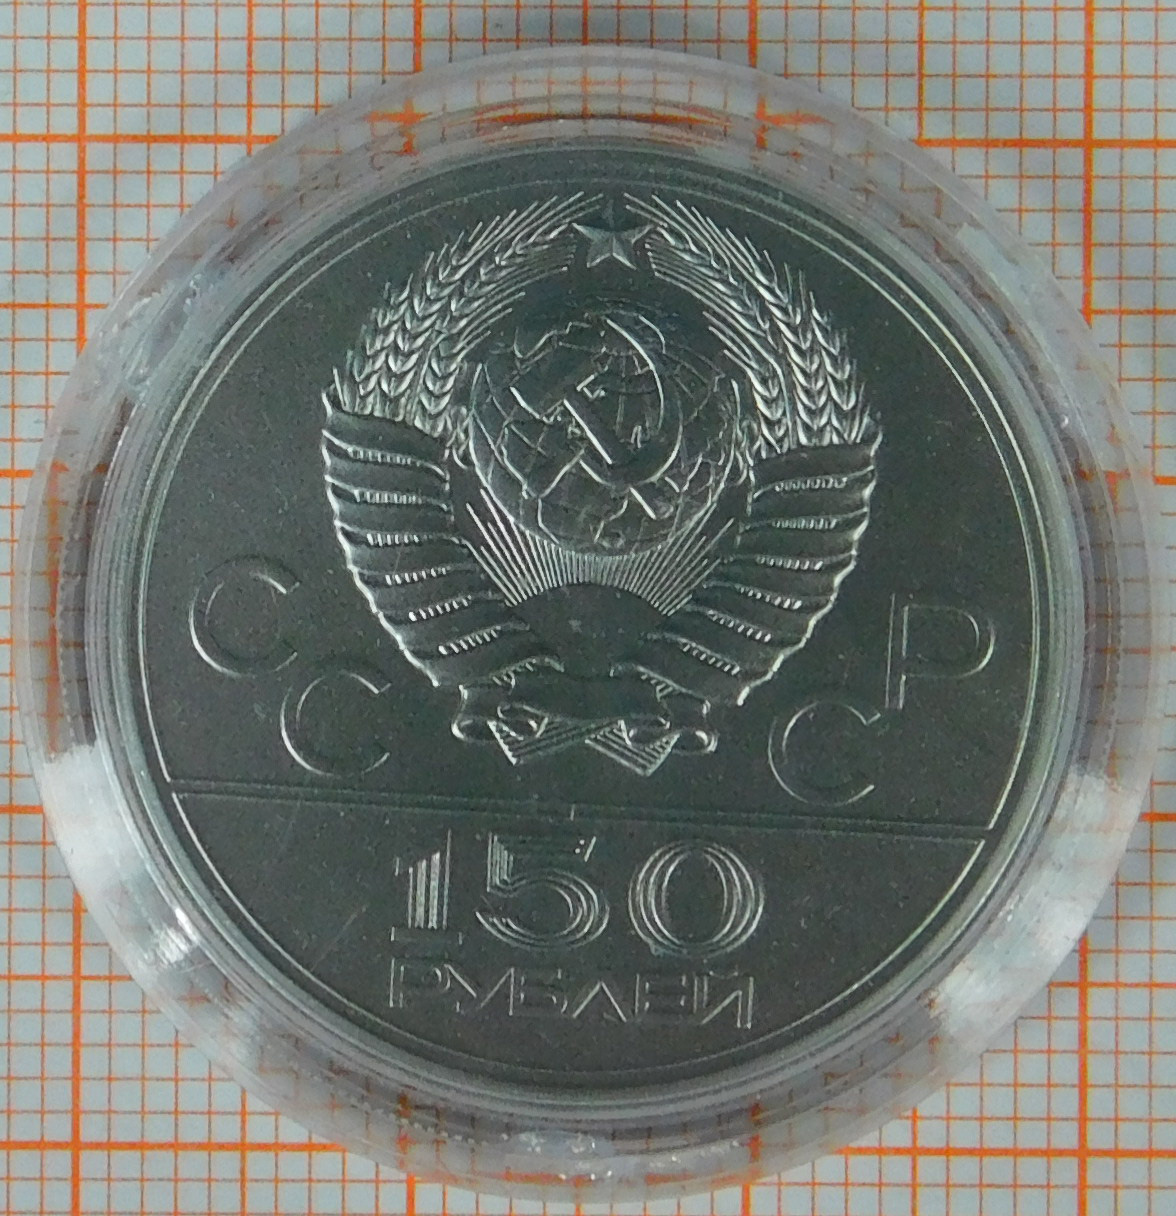 1 Platinmünze. 150 Rubel. Sowjetunion. 1979. - Image 5 of 5